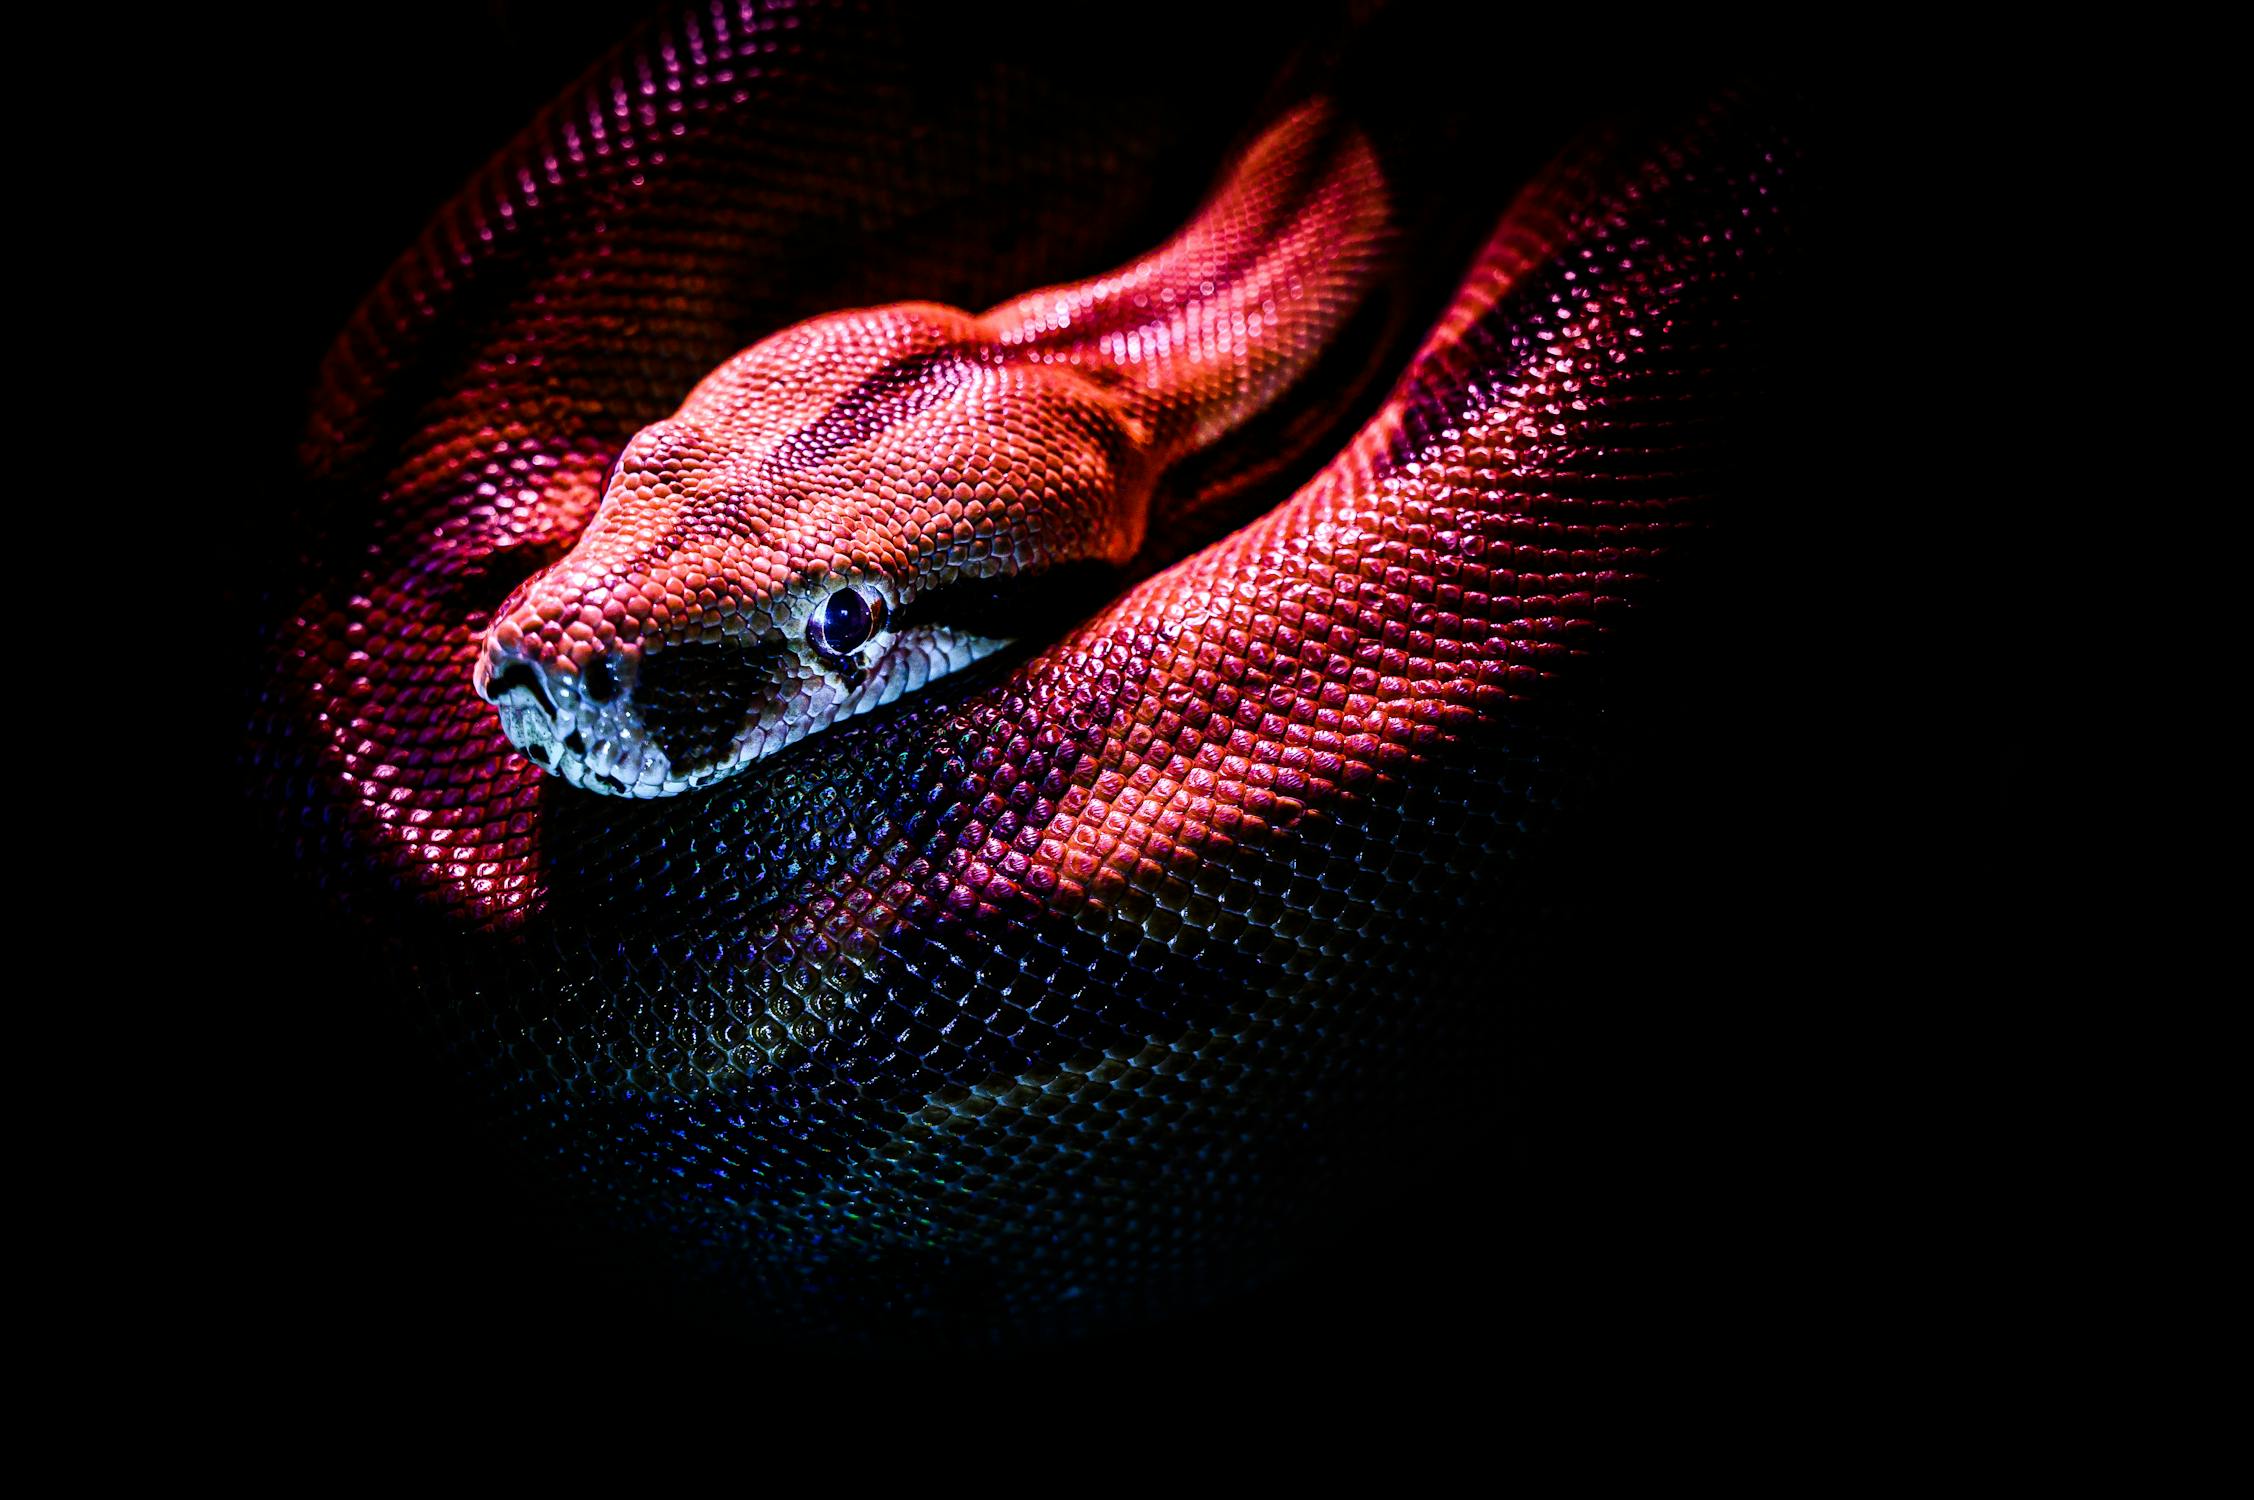 Python snake coiled around